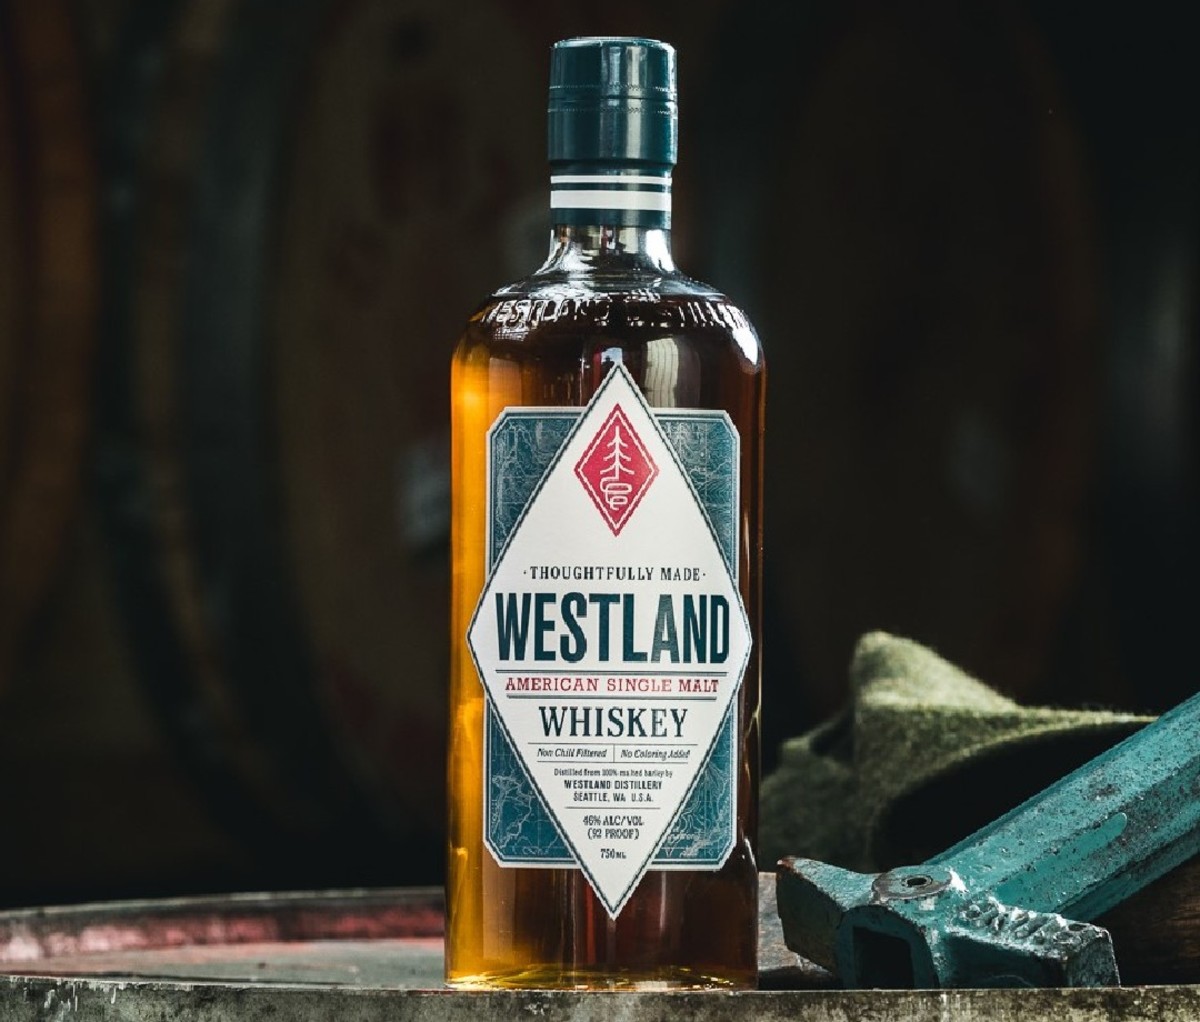 A bottle of Westland Flagship Single Malt Whiskey.